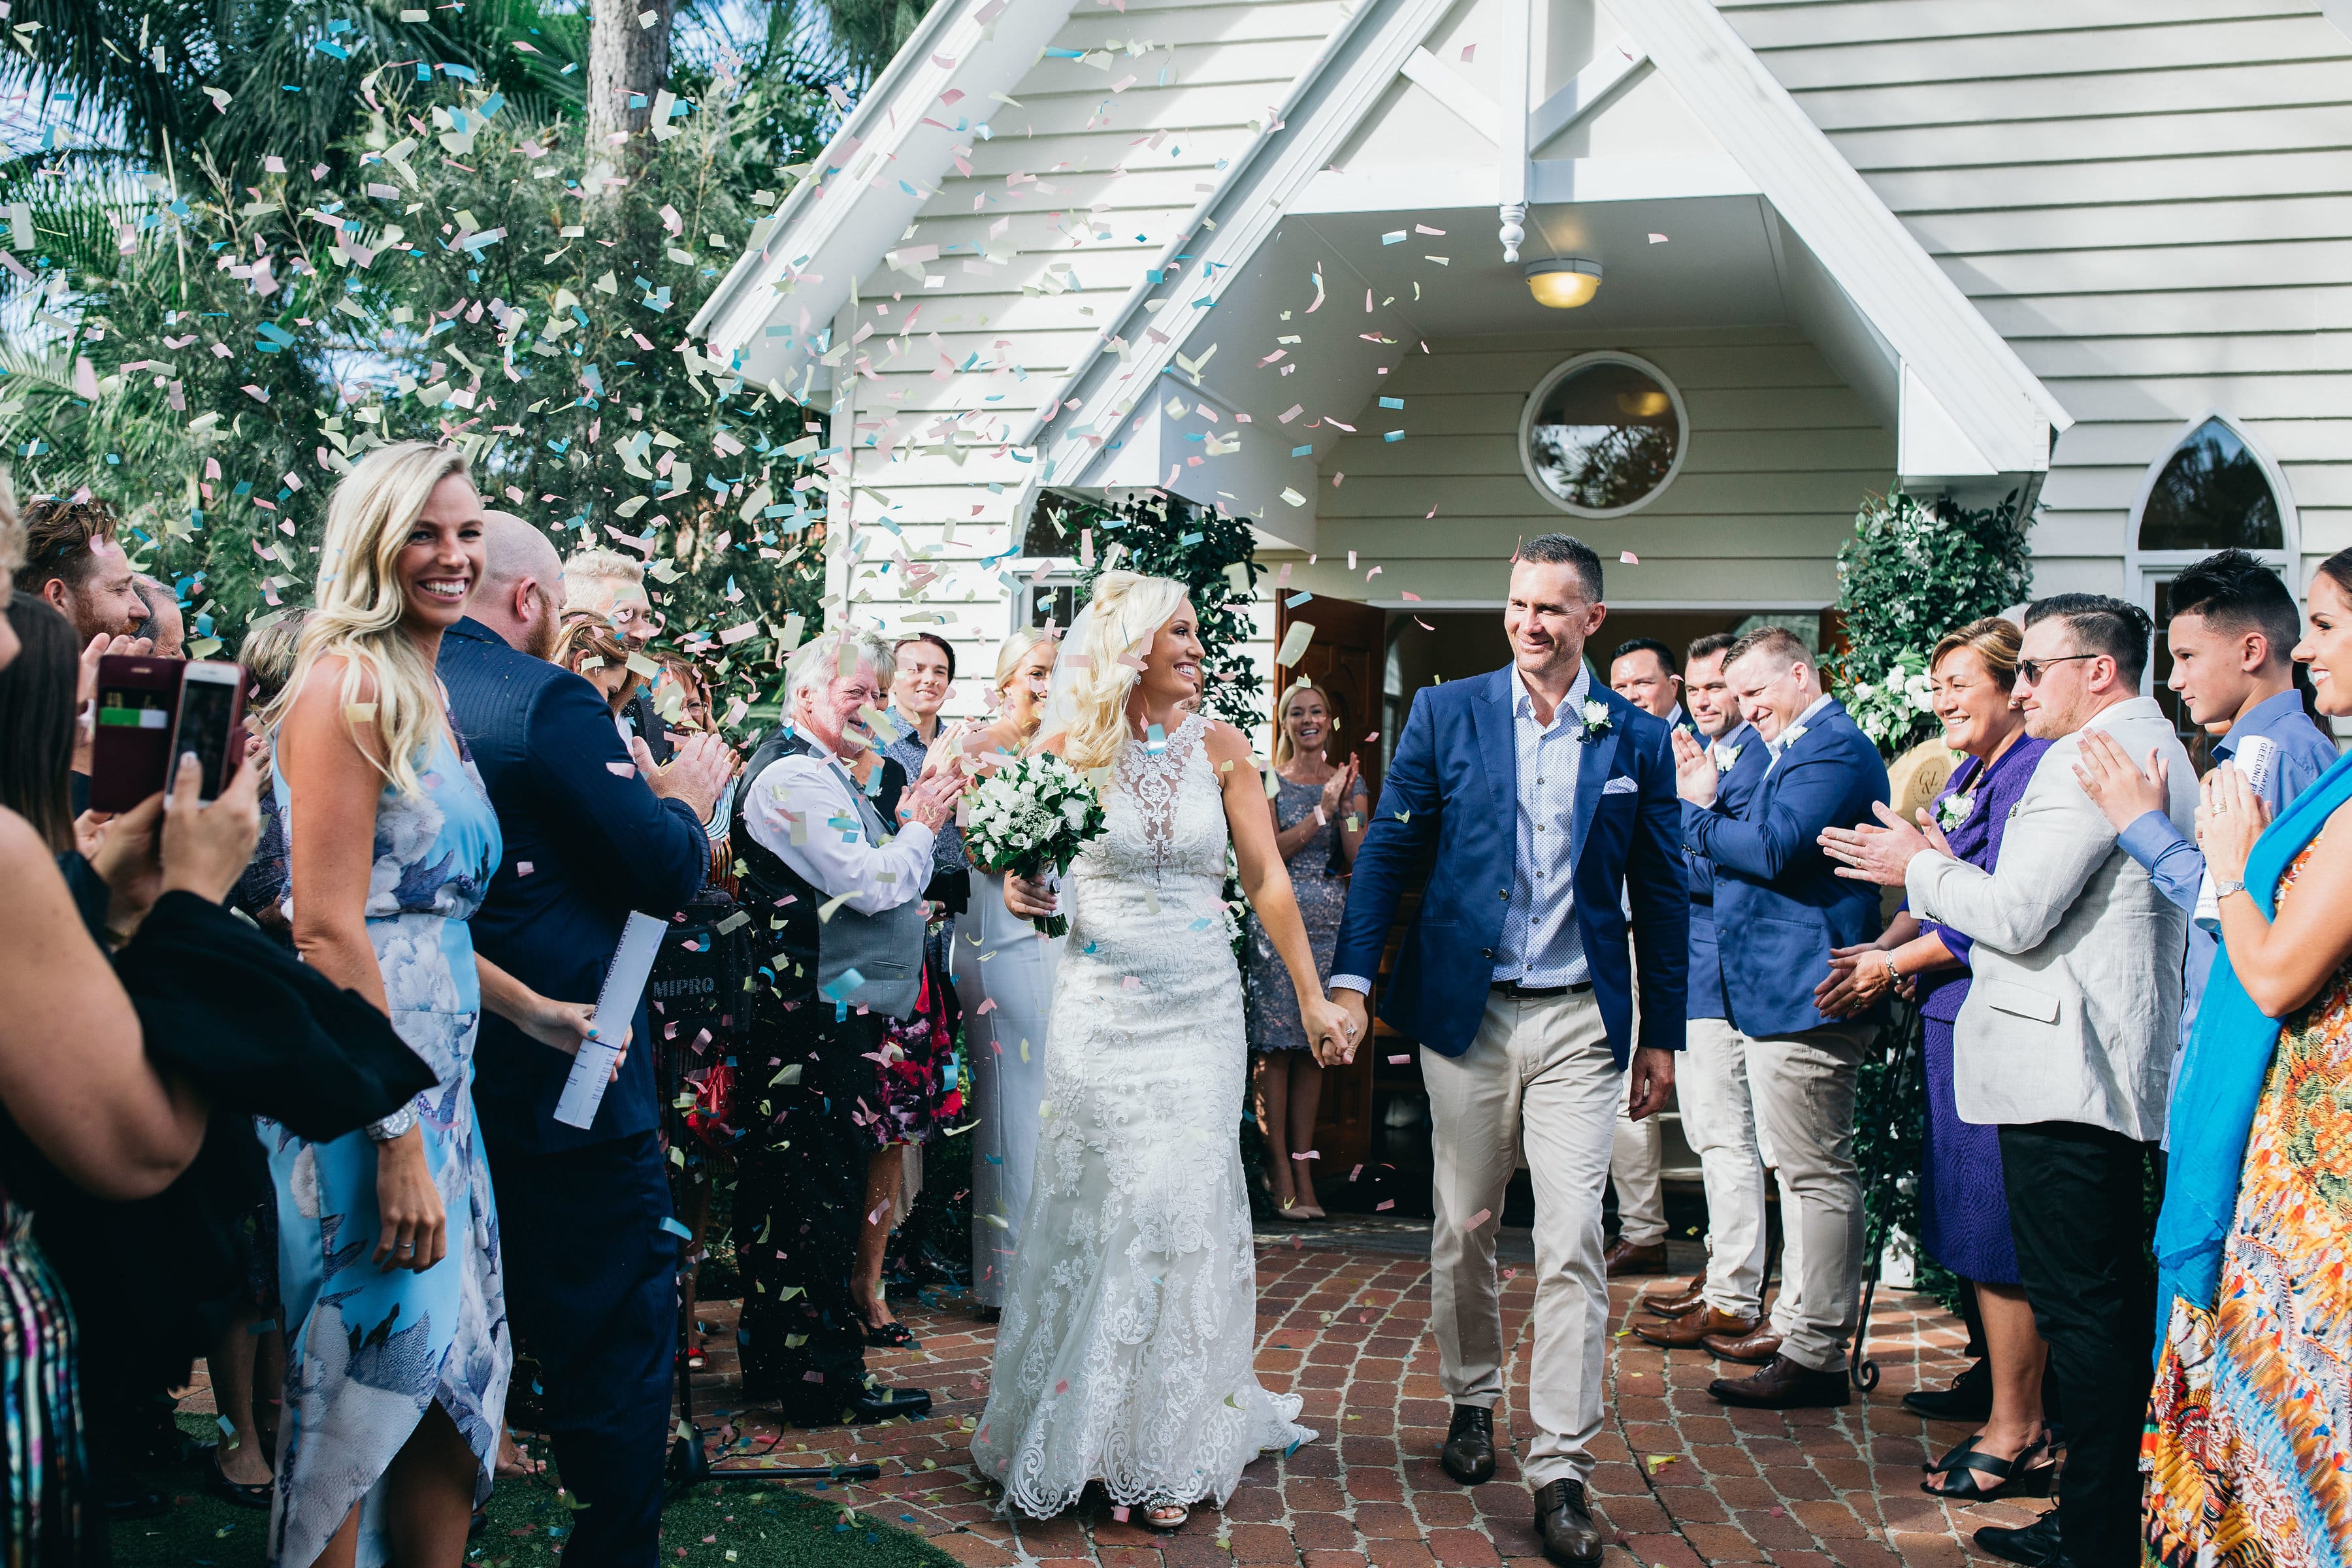 Elegant Australia Wedding with Navy, Emerald, and Silver Palette - #MidgleyBride wearing Winifred wedding dress by Sottero and Midgley